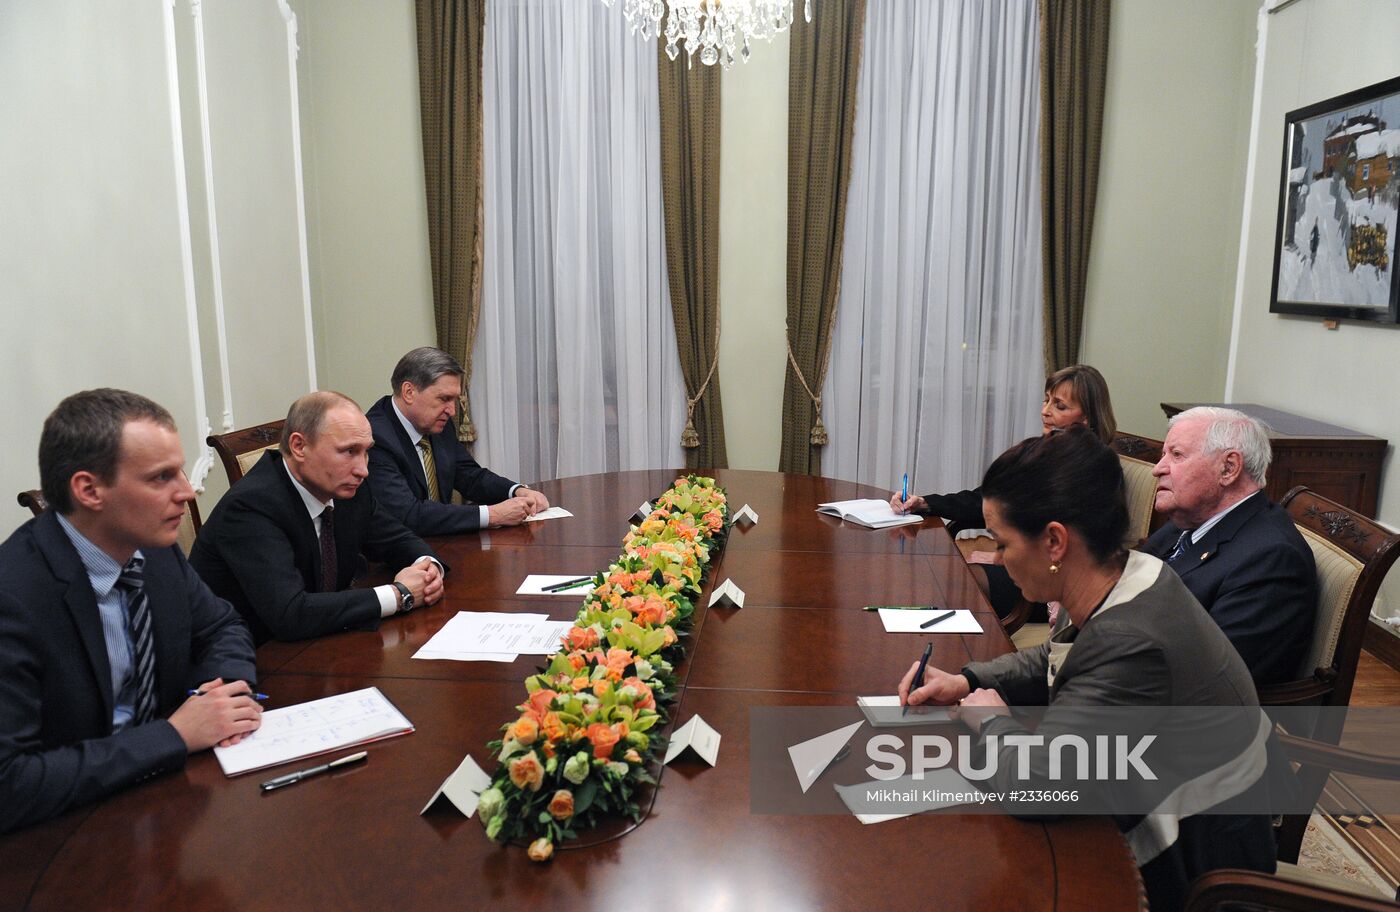 Vladimir Putin meets with former chancellor of Germany Helmut Schmidt